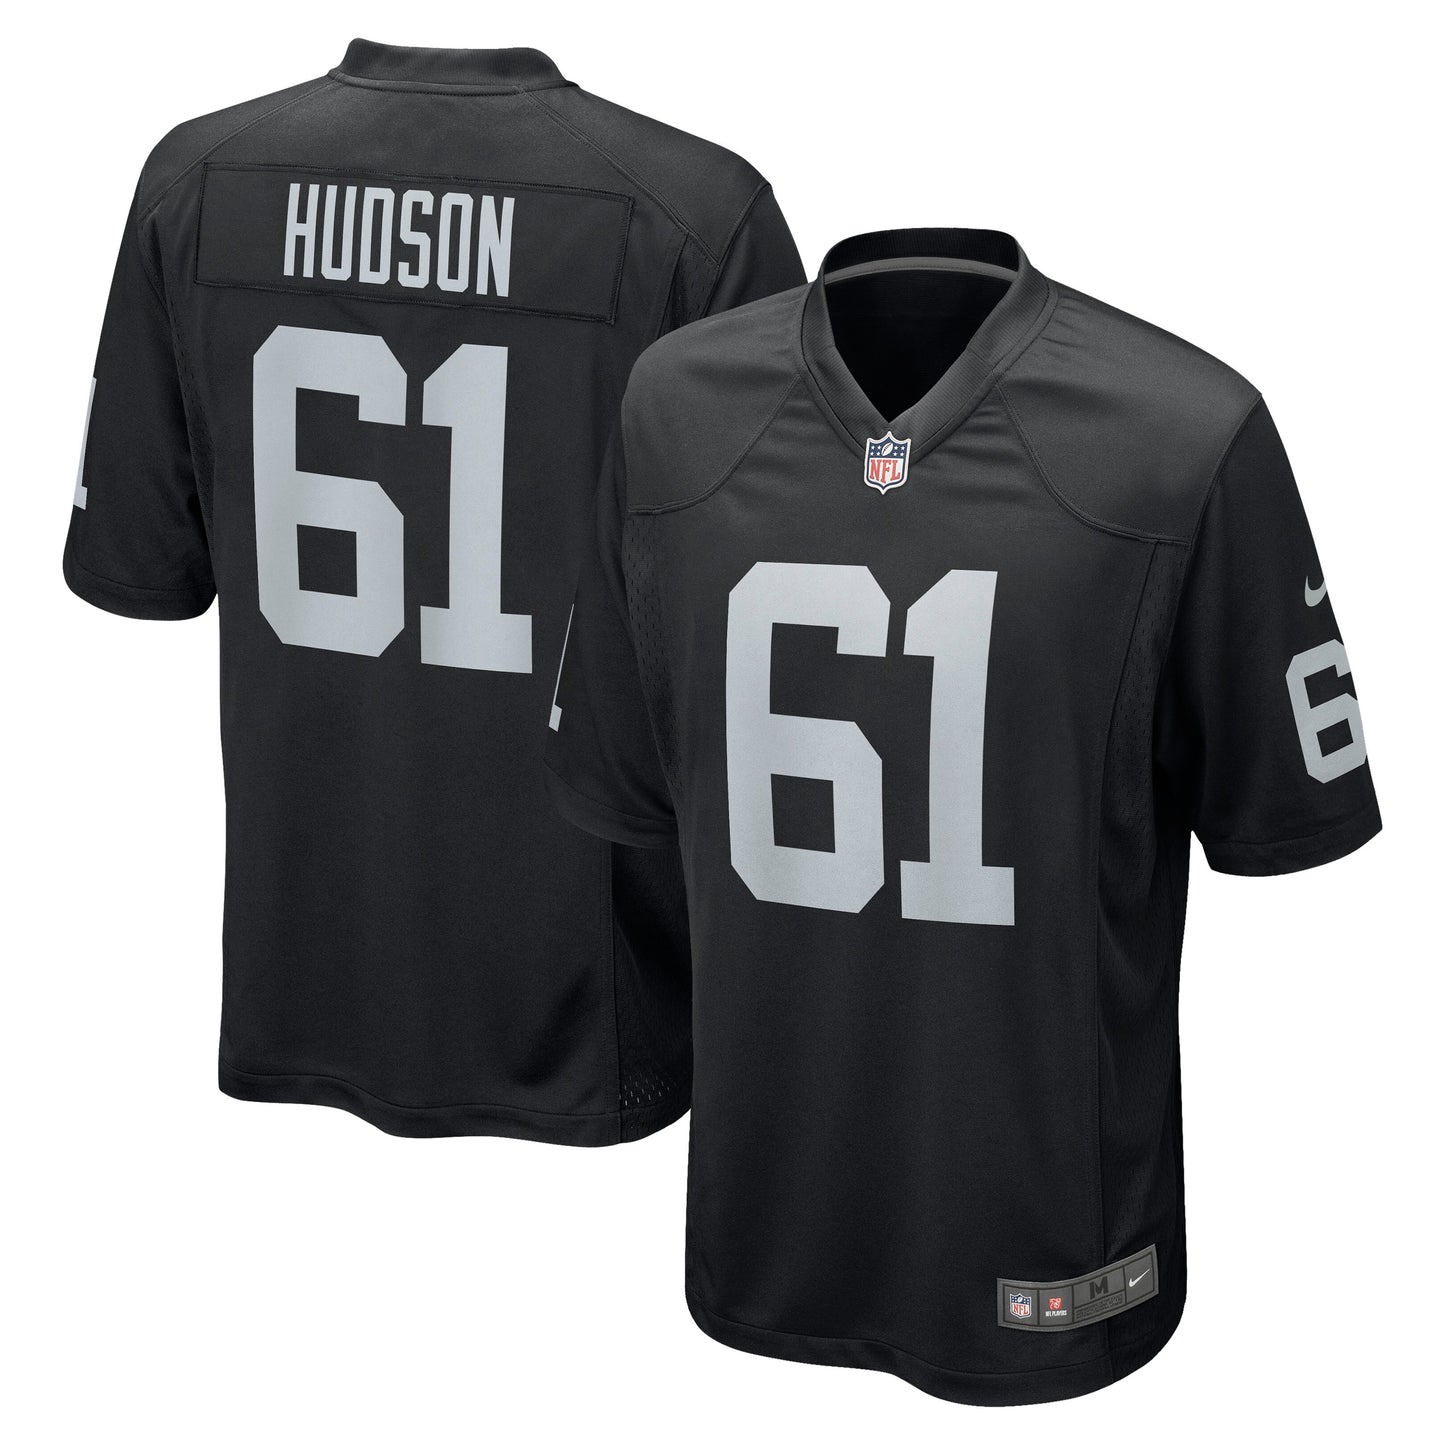 Rodney Hudson Las Vegas Raiders Nike Game Jersey - Black